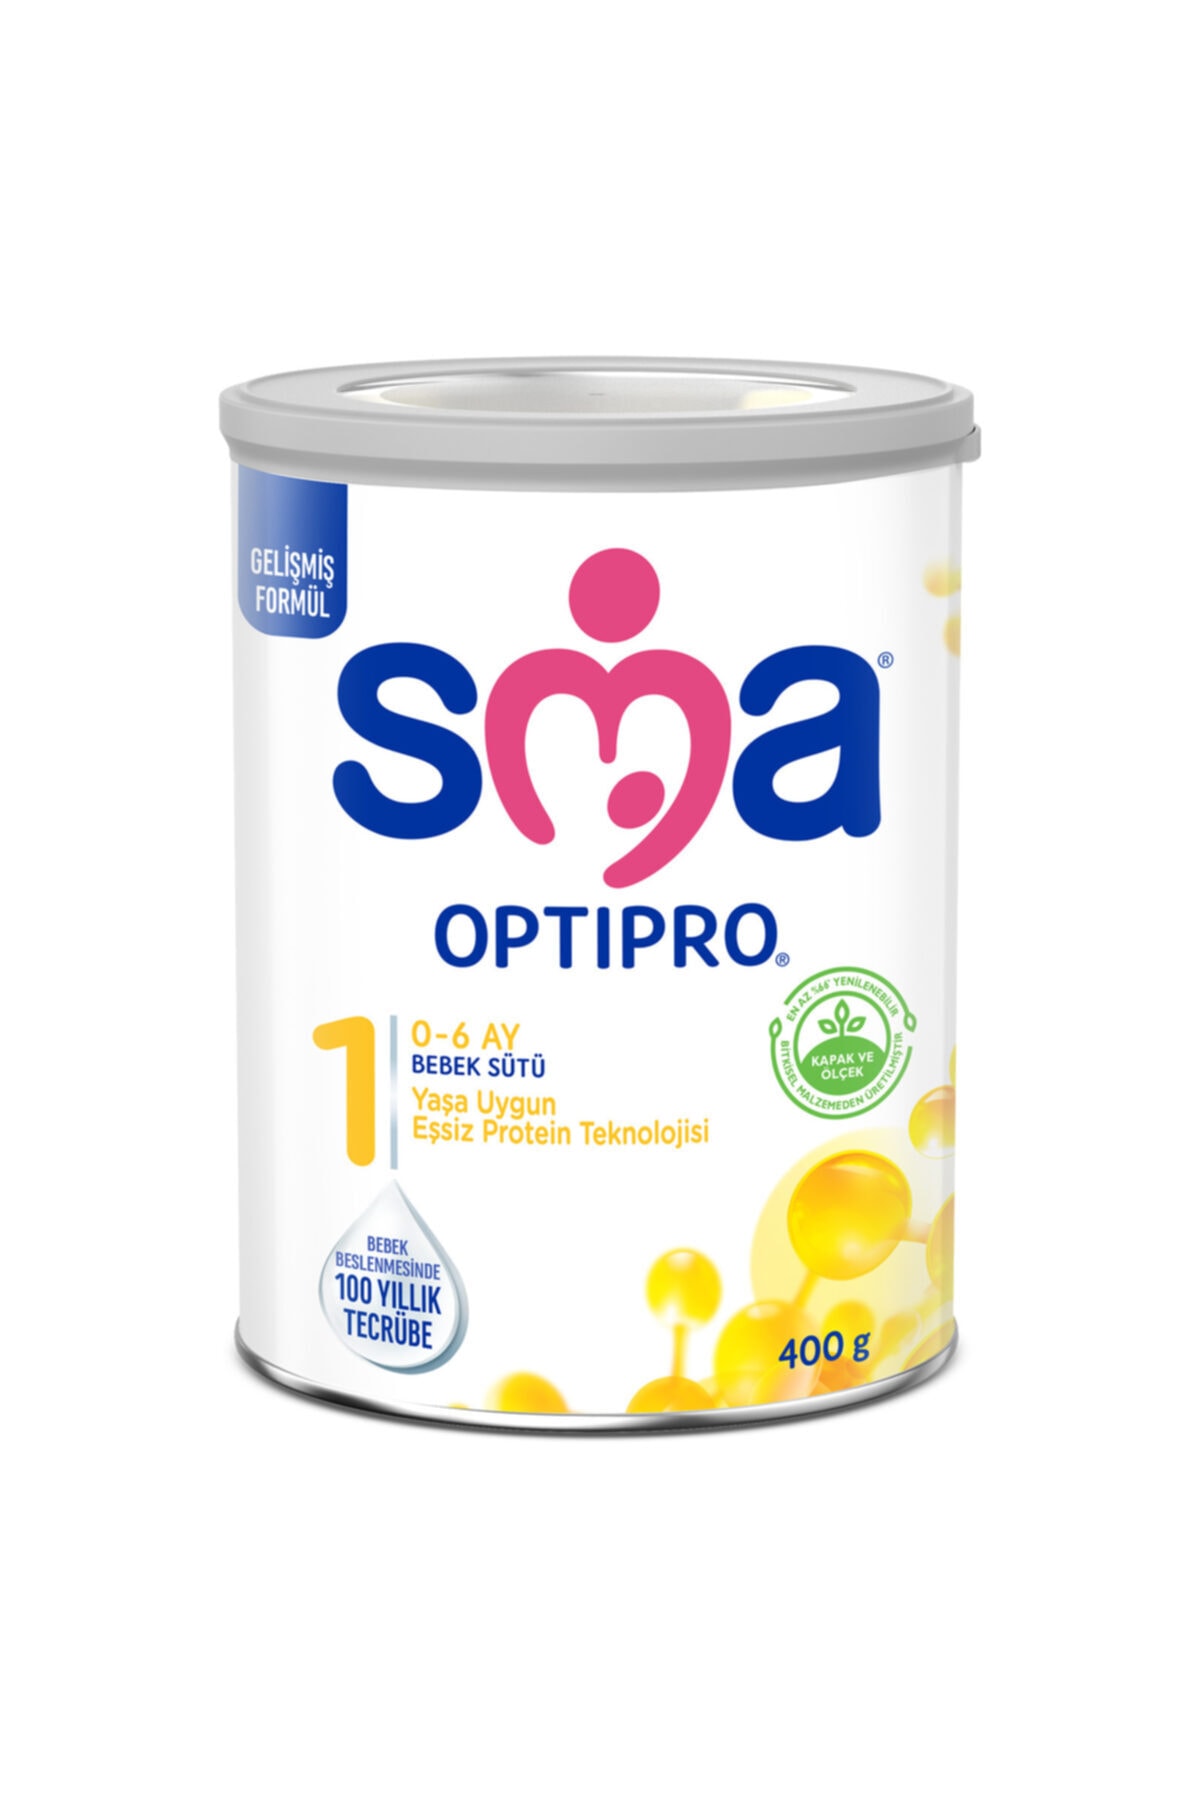 SMA Optipro Probıyotık 1 400g 0-6 Ay Bebek Sutu